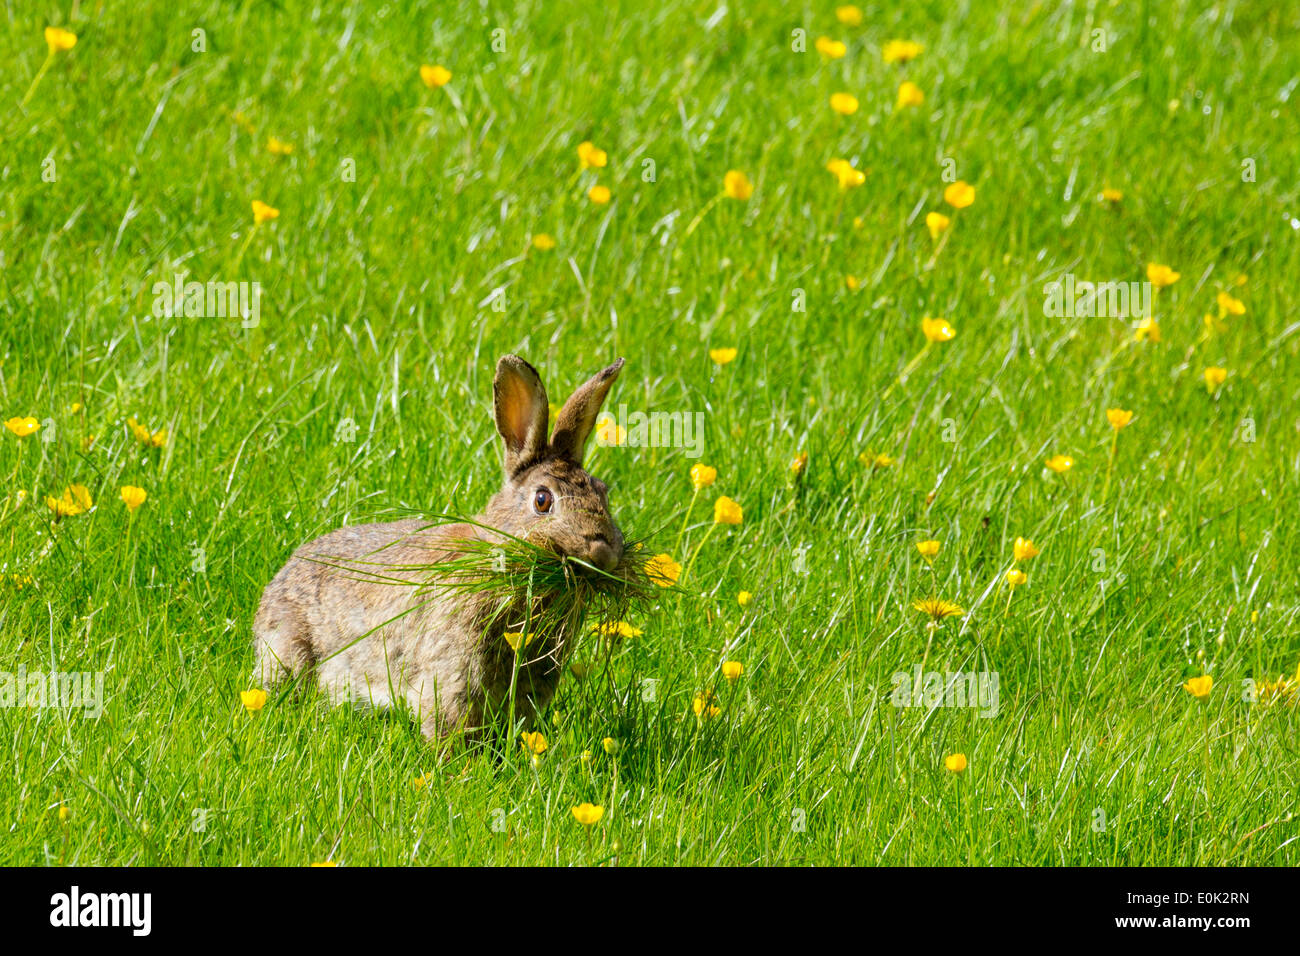 Wild rabbit munching grass in a field of buttercups, UK Stock Photo